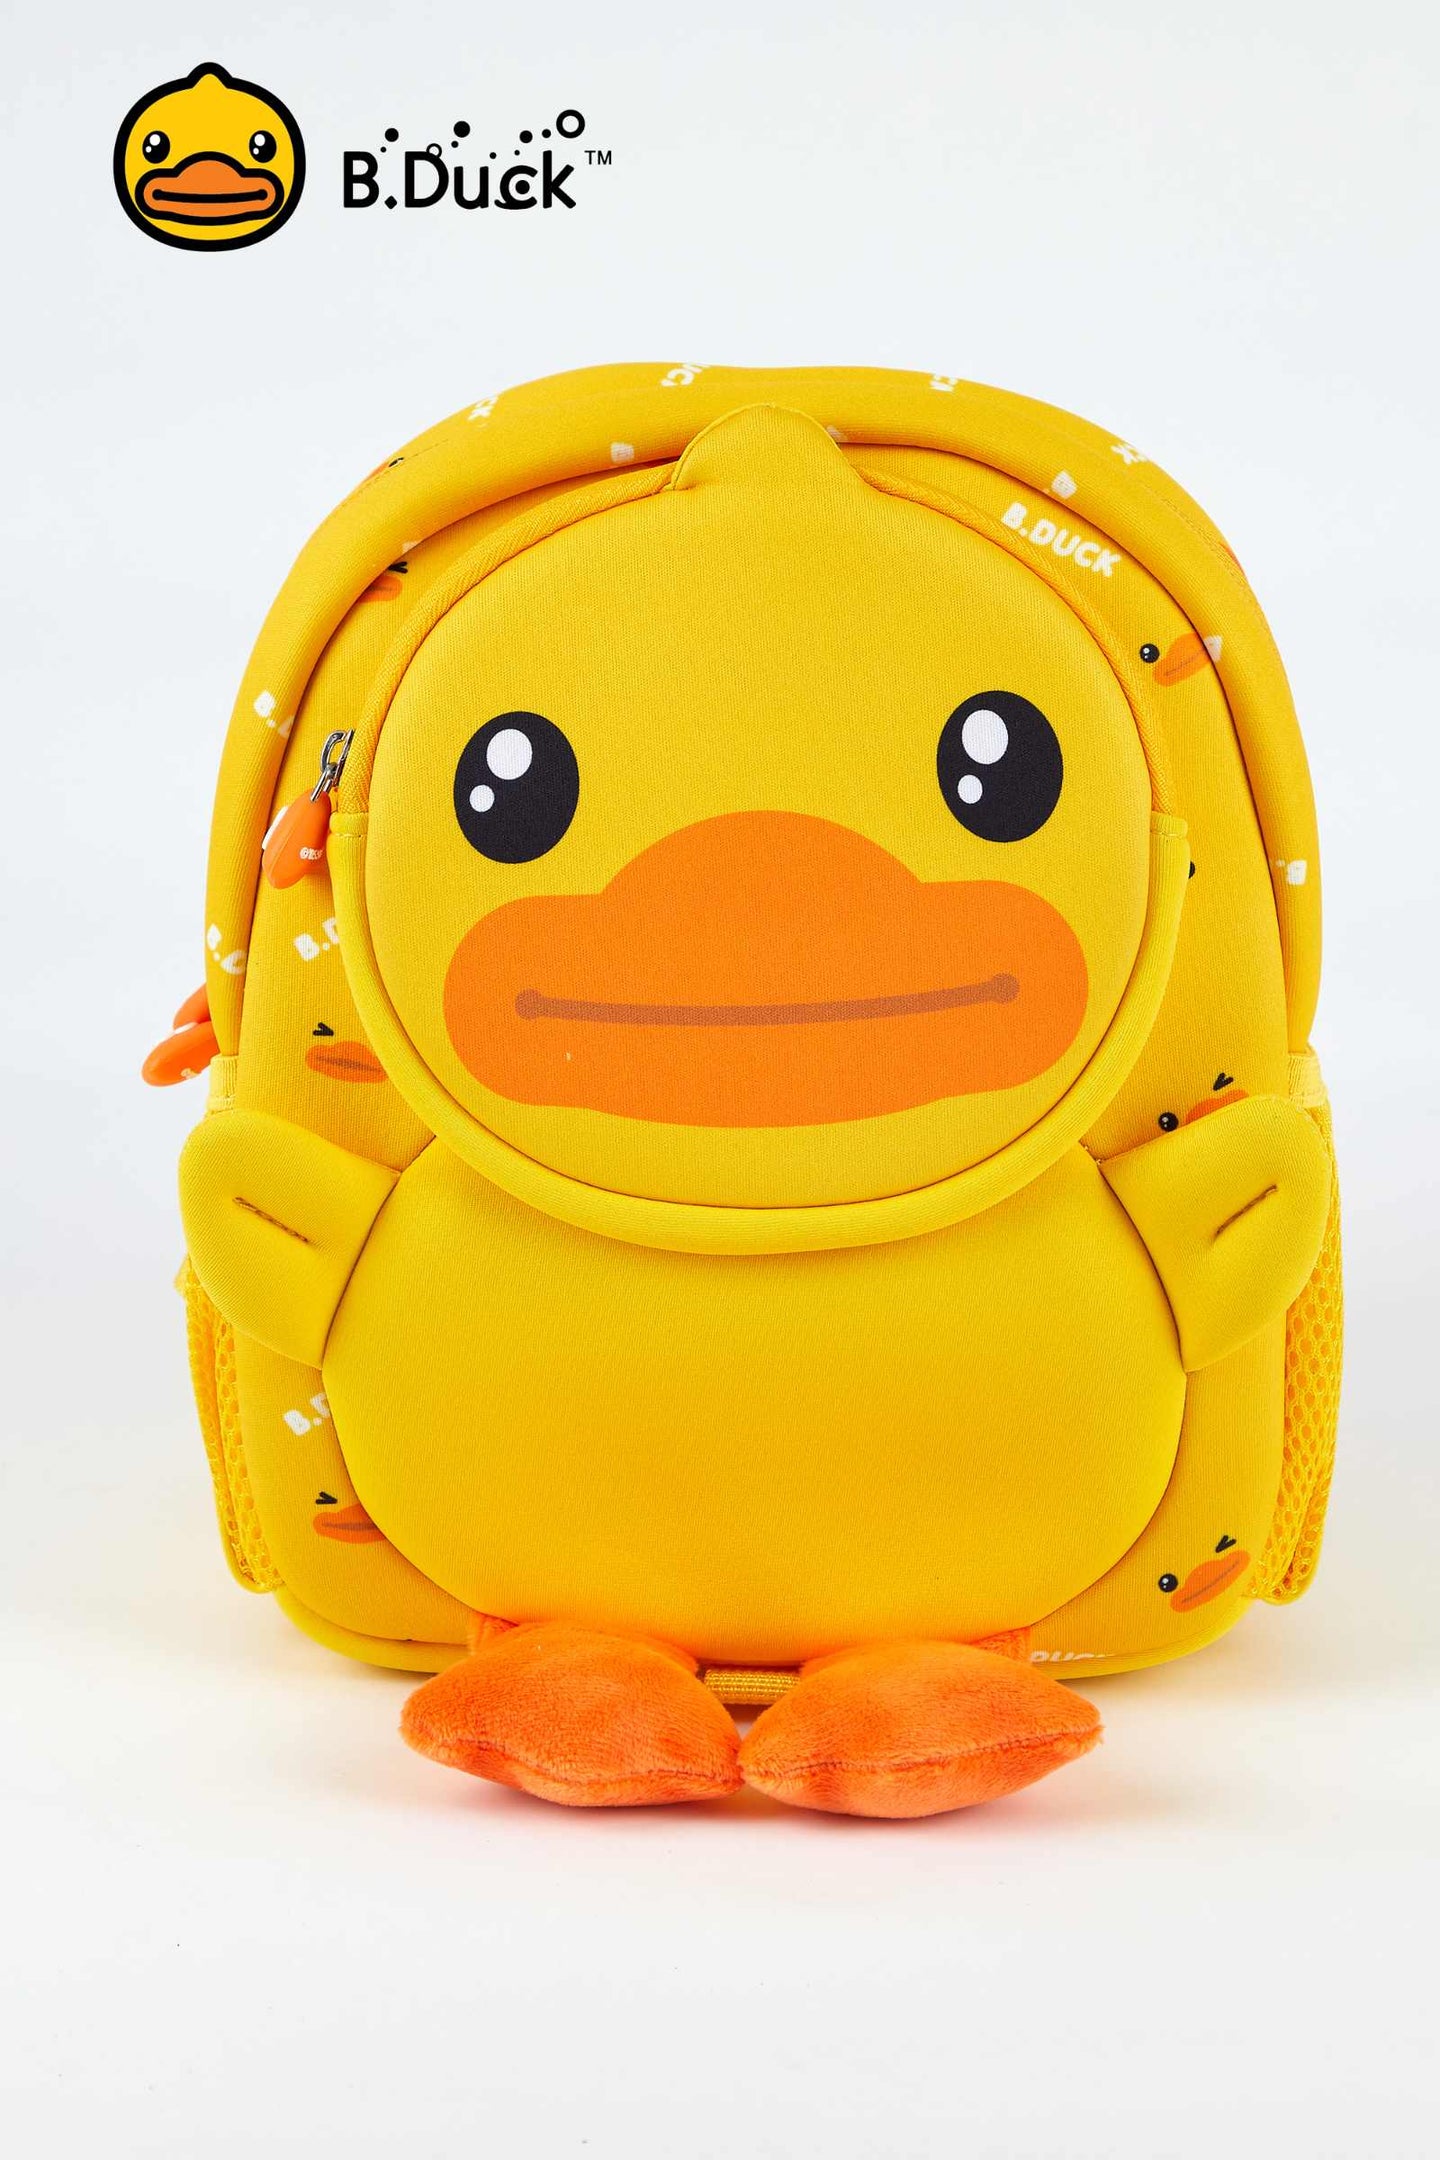 B.Duck Mini Backpack Yellow Cute For Kids Child Mesh Pocket